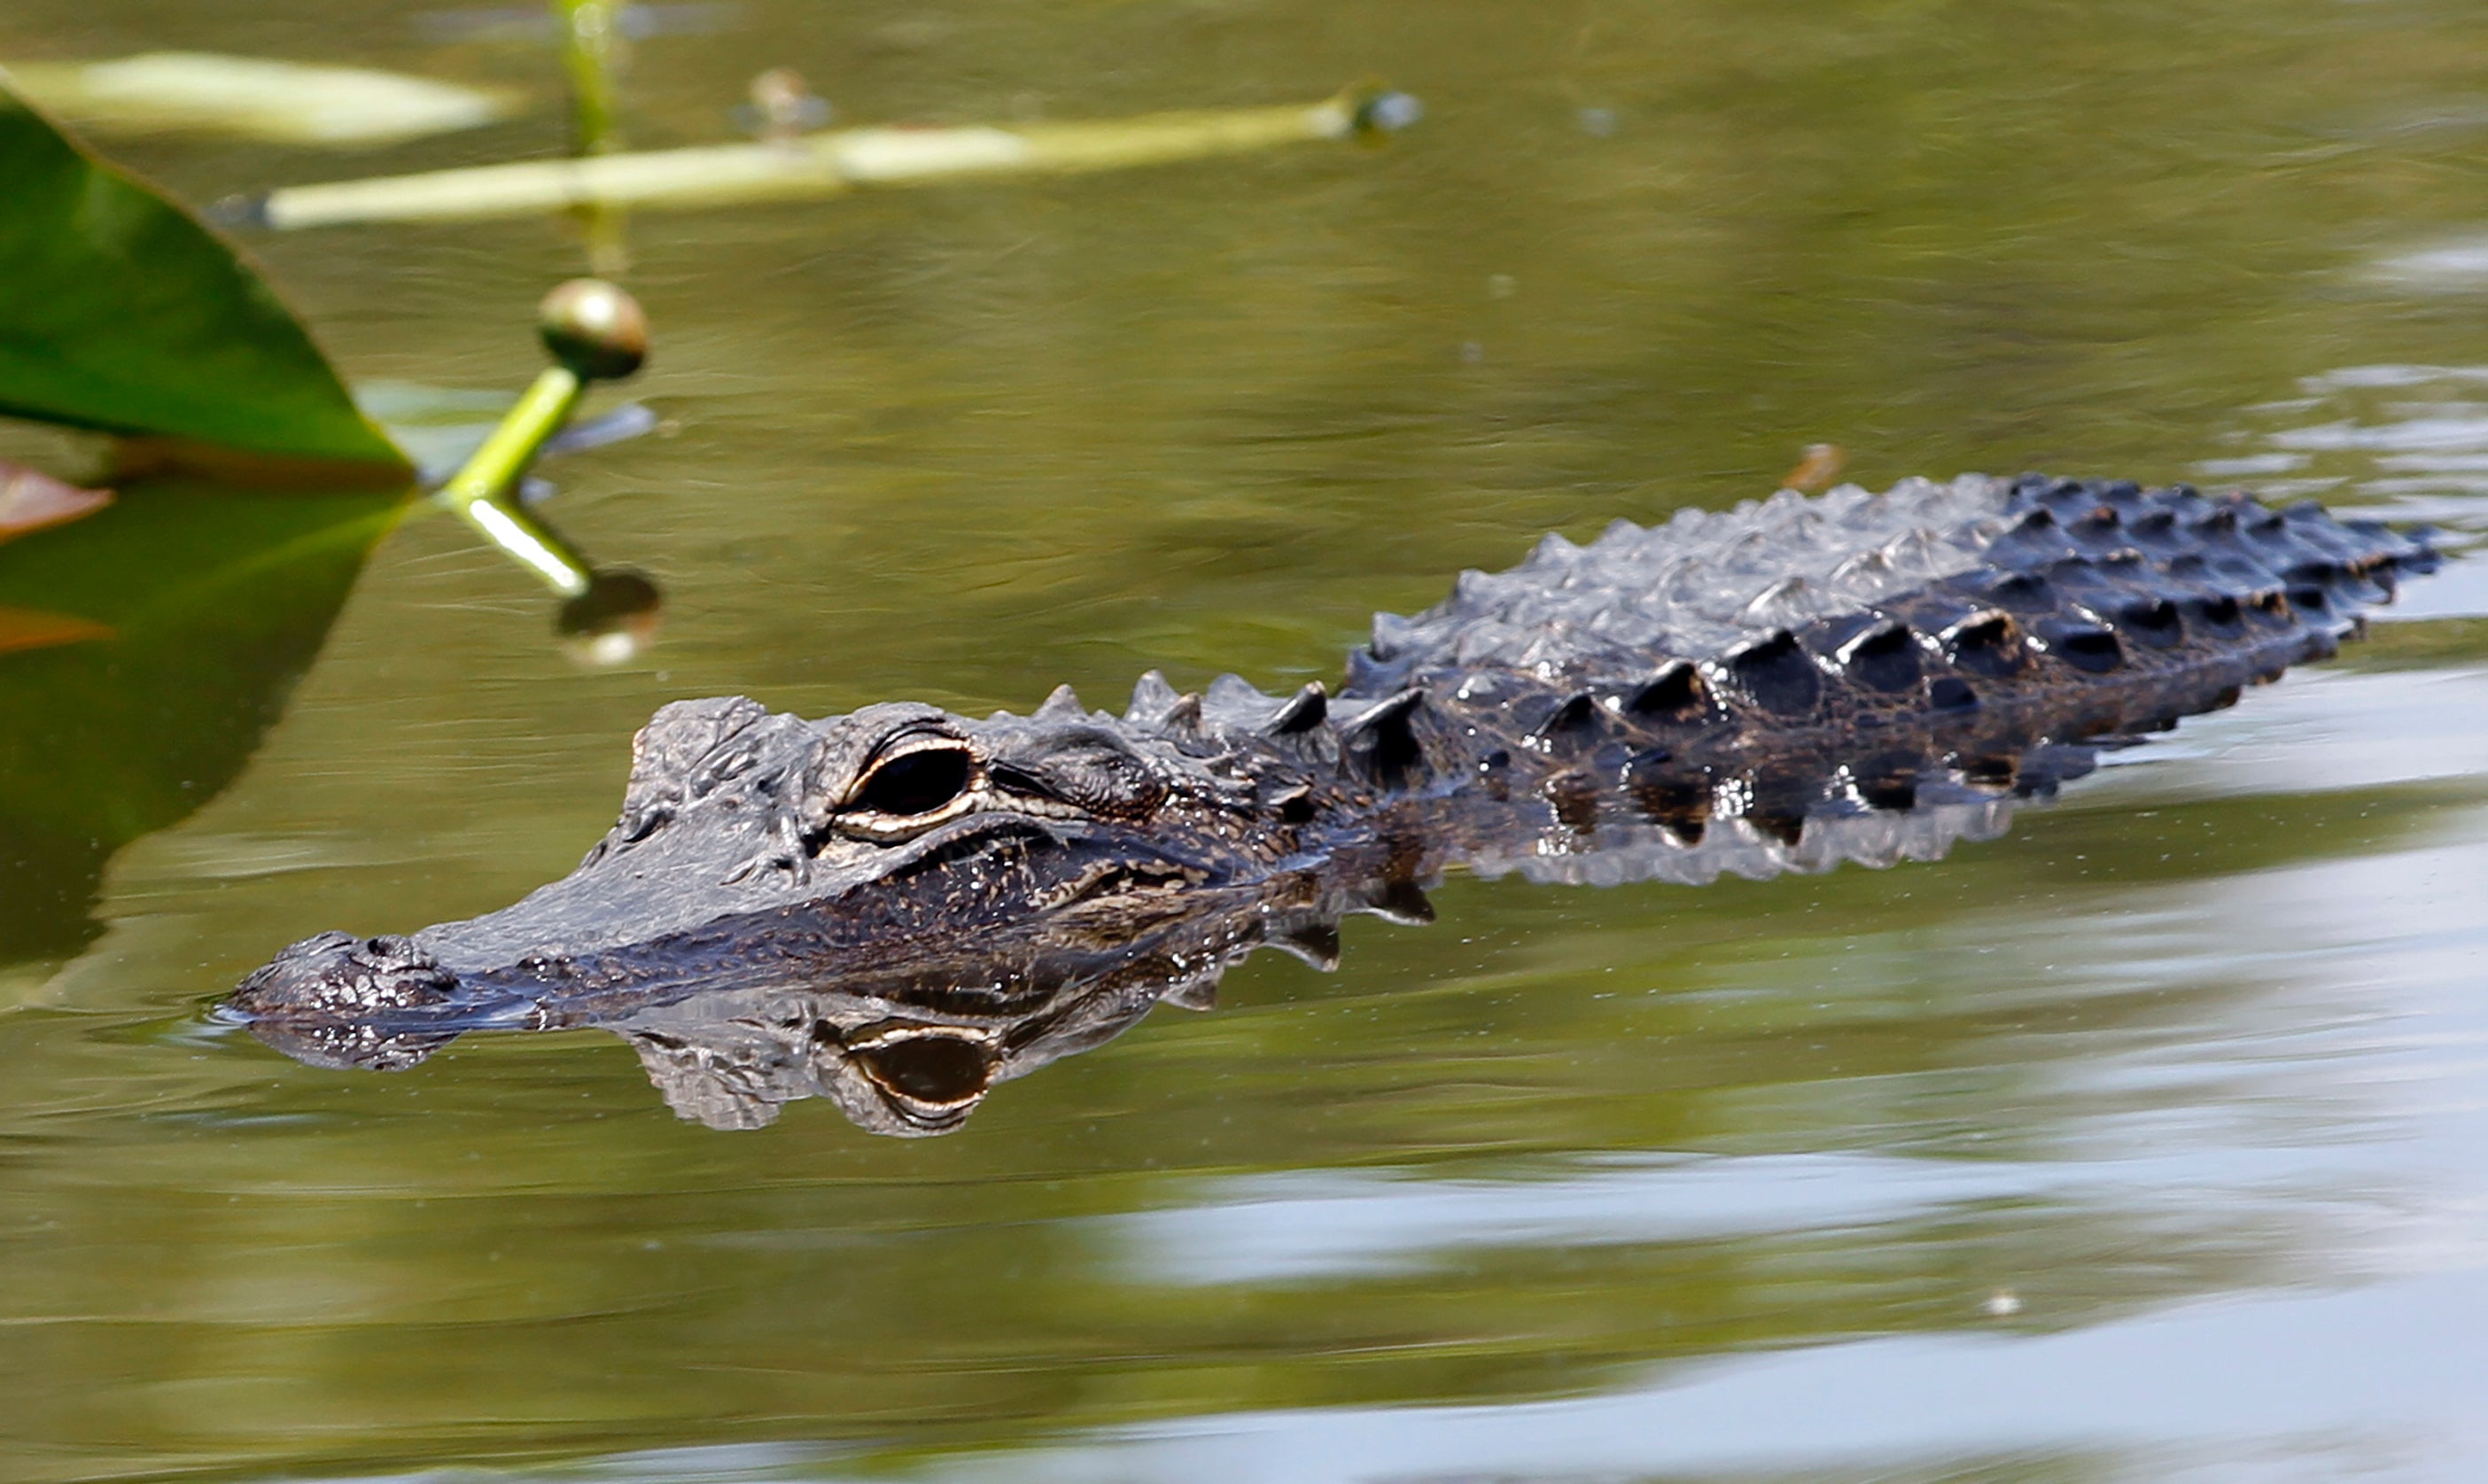 An alligator swims in Florida